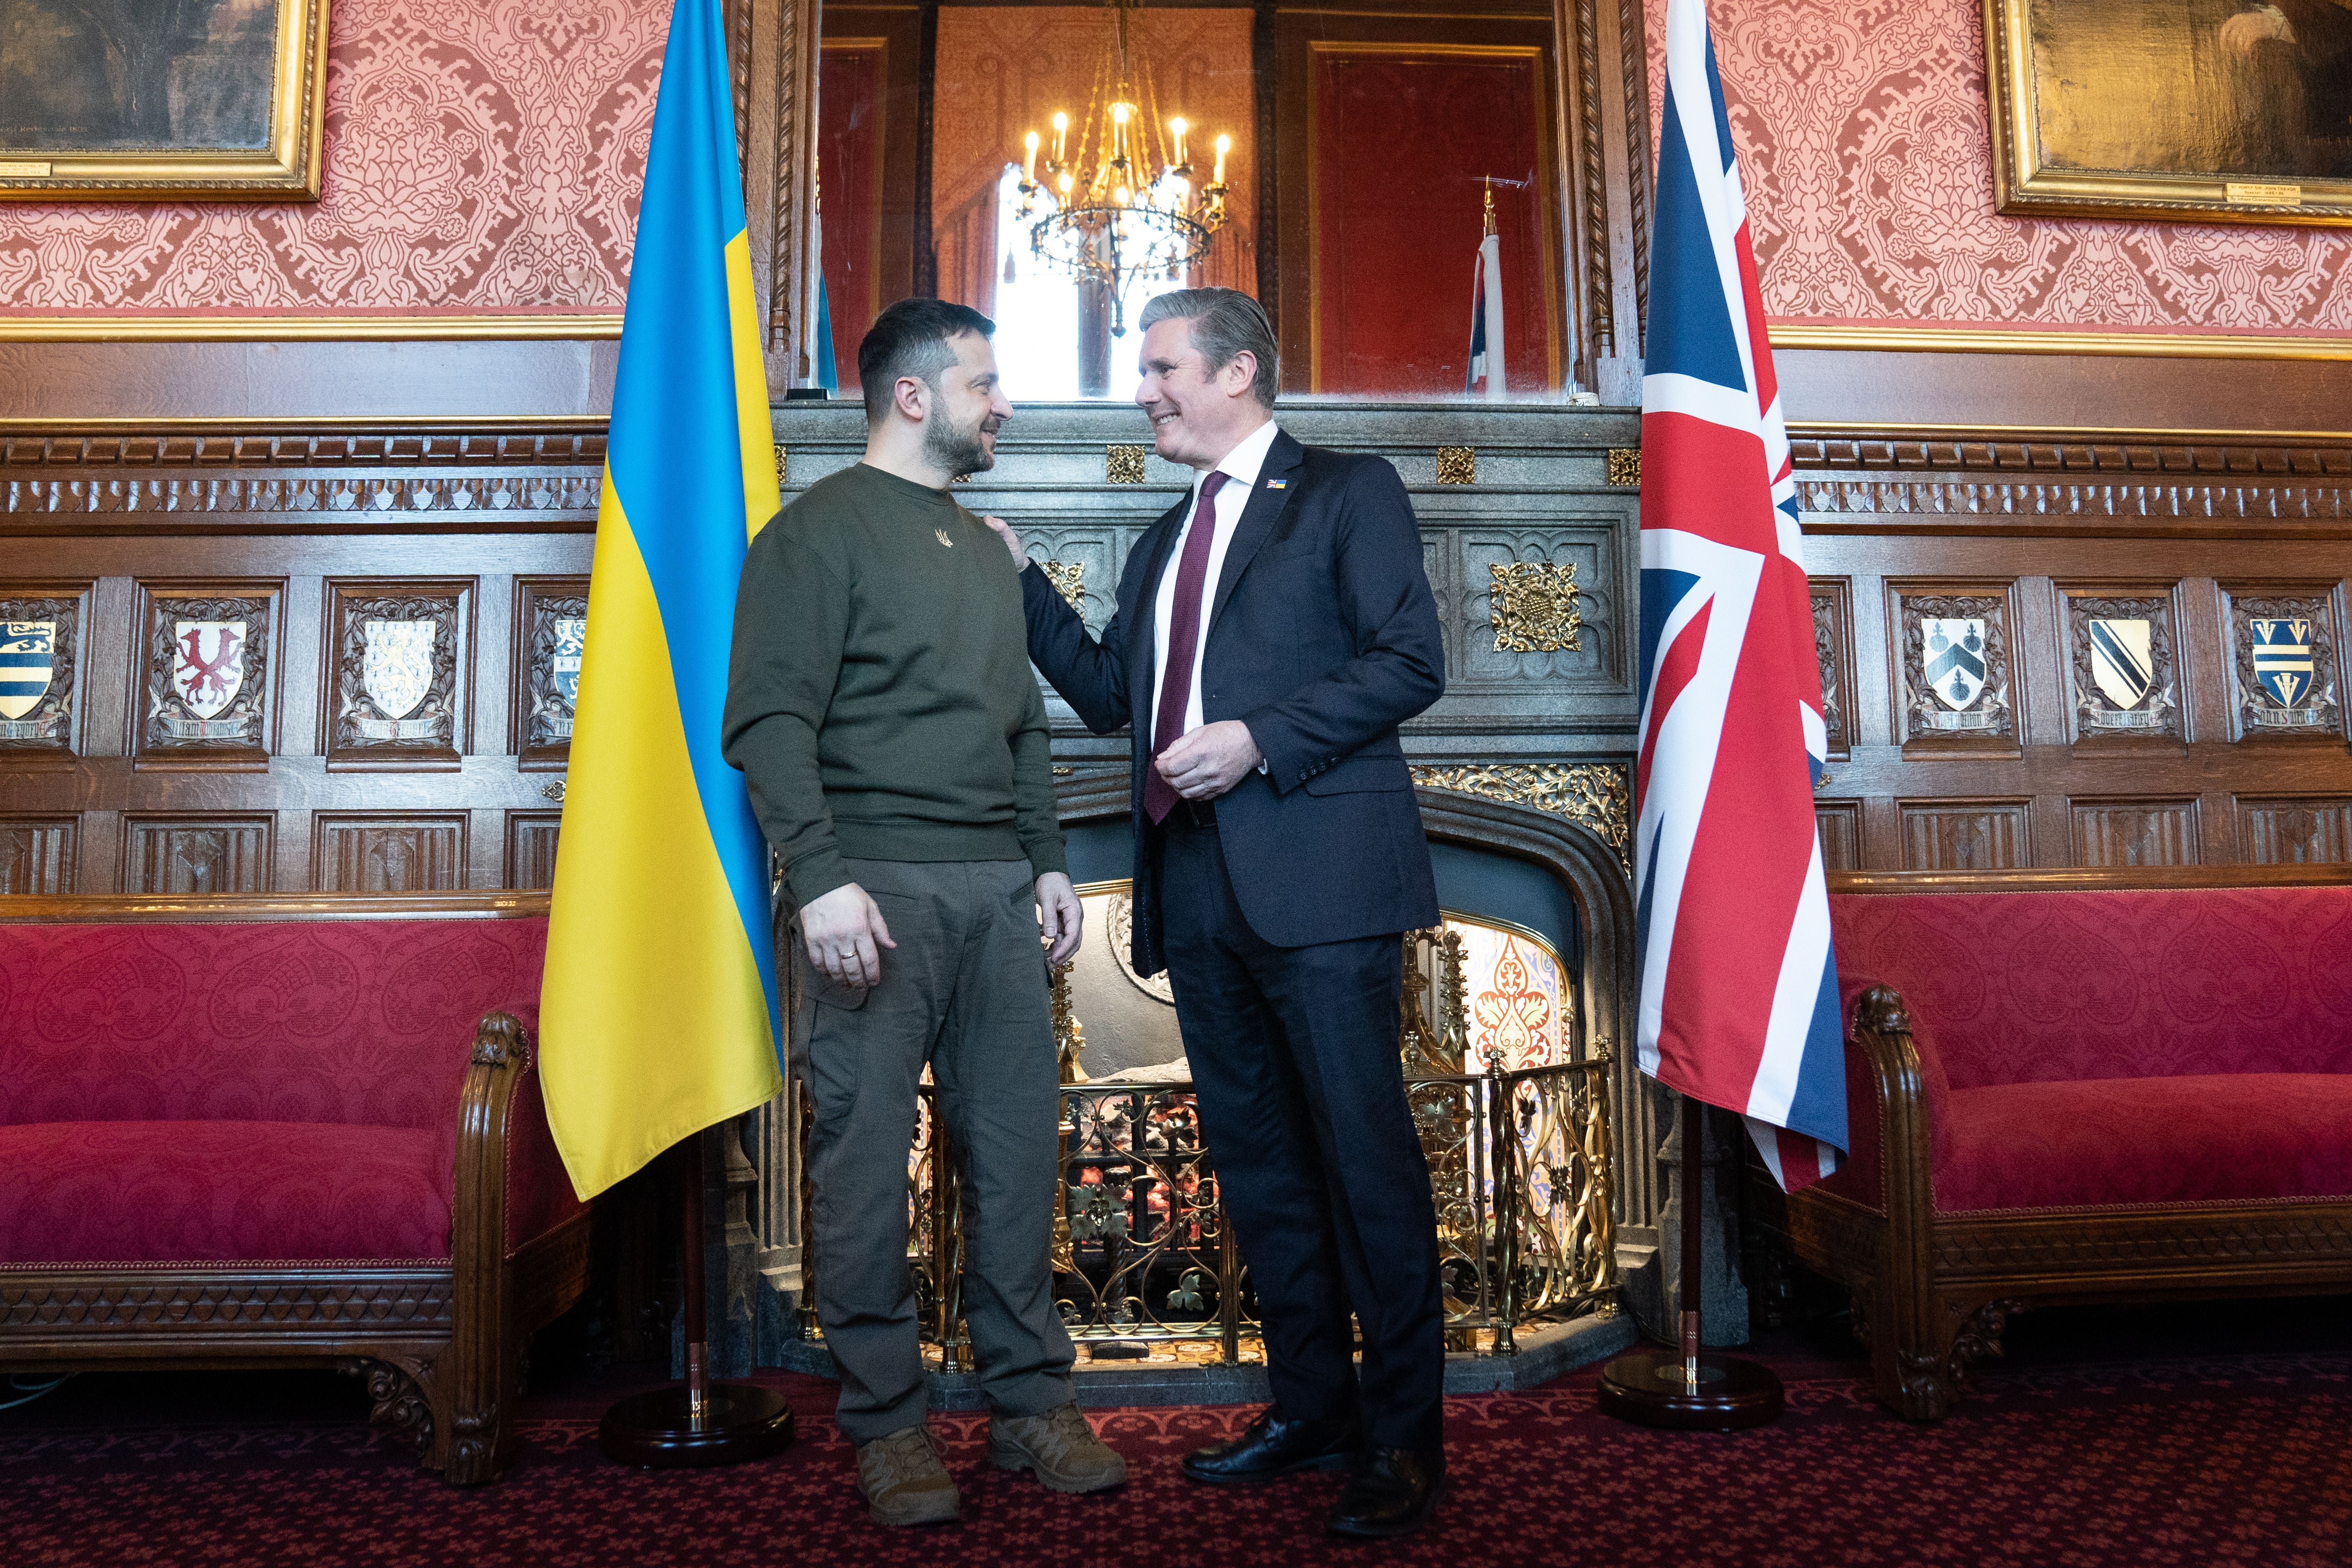 Labour leader Sir Keir Starmer had face-to-face talks with Ukrainian president Volodymyr Zelensky in Kyiv (Stefan Rousseau/PA)